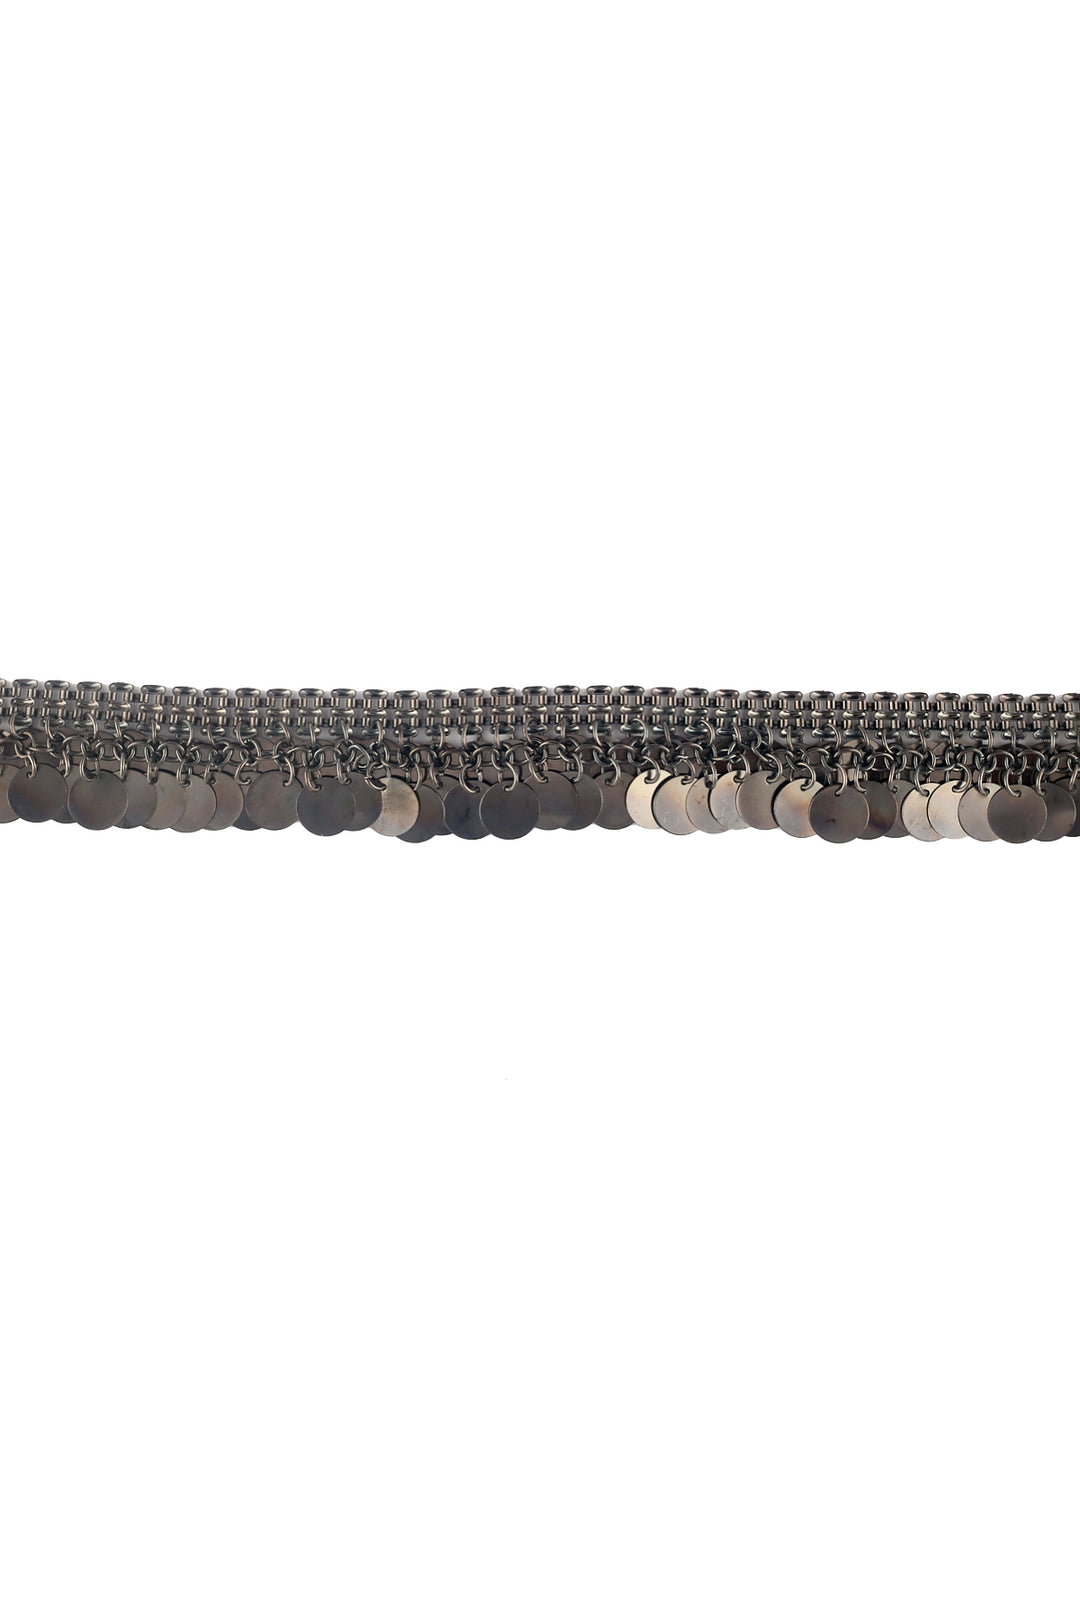 1 m elastic lace border - Stephanoise-Mediac - 55 mm wide - black